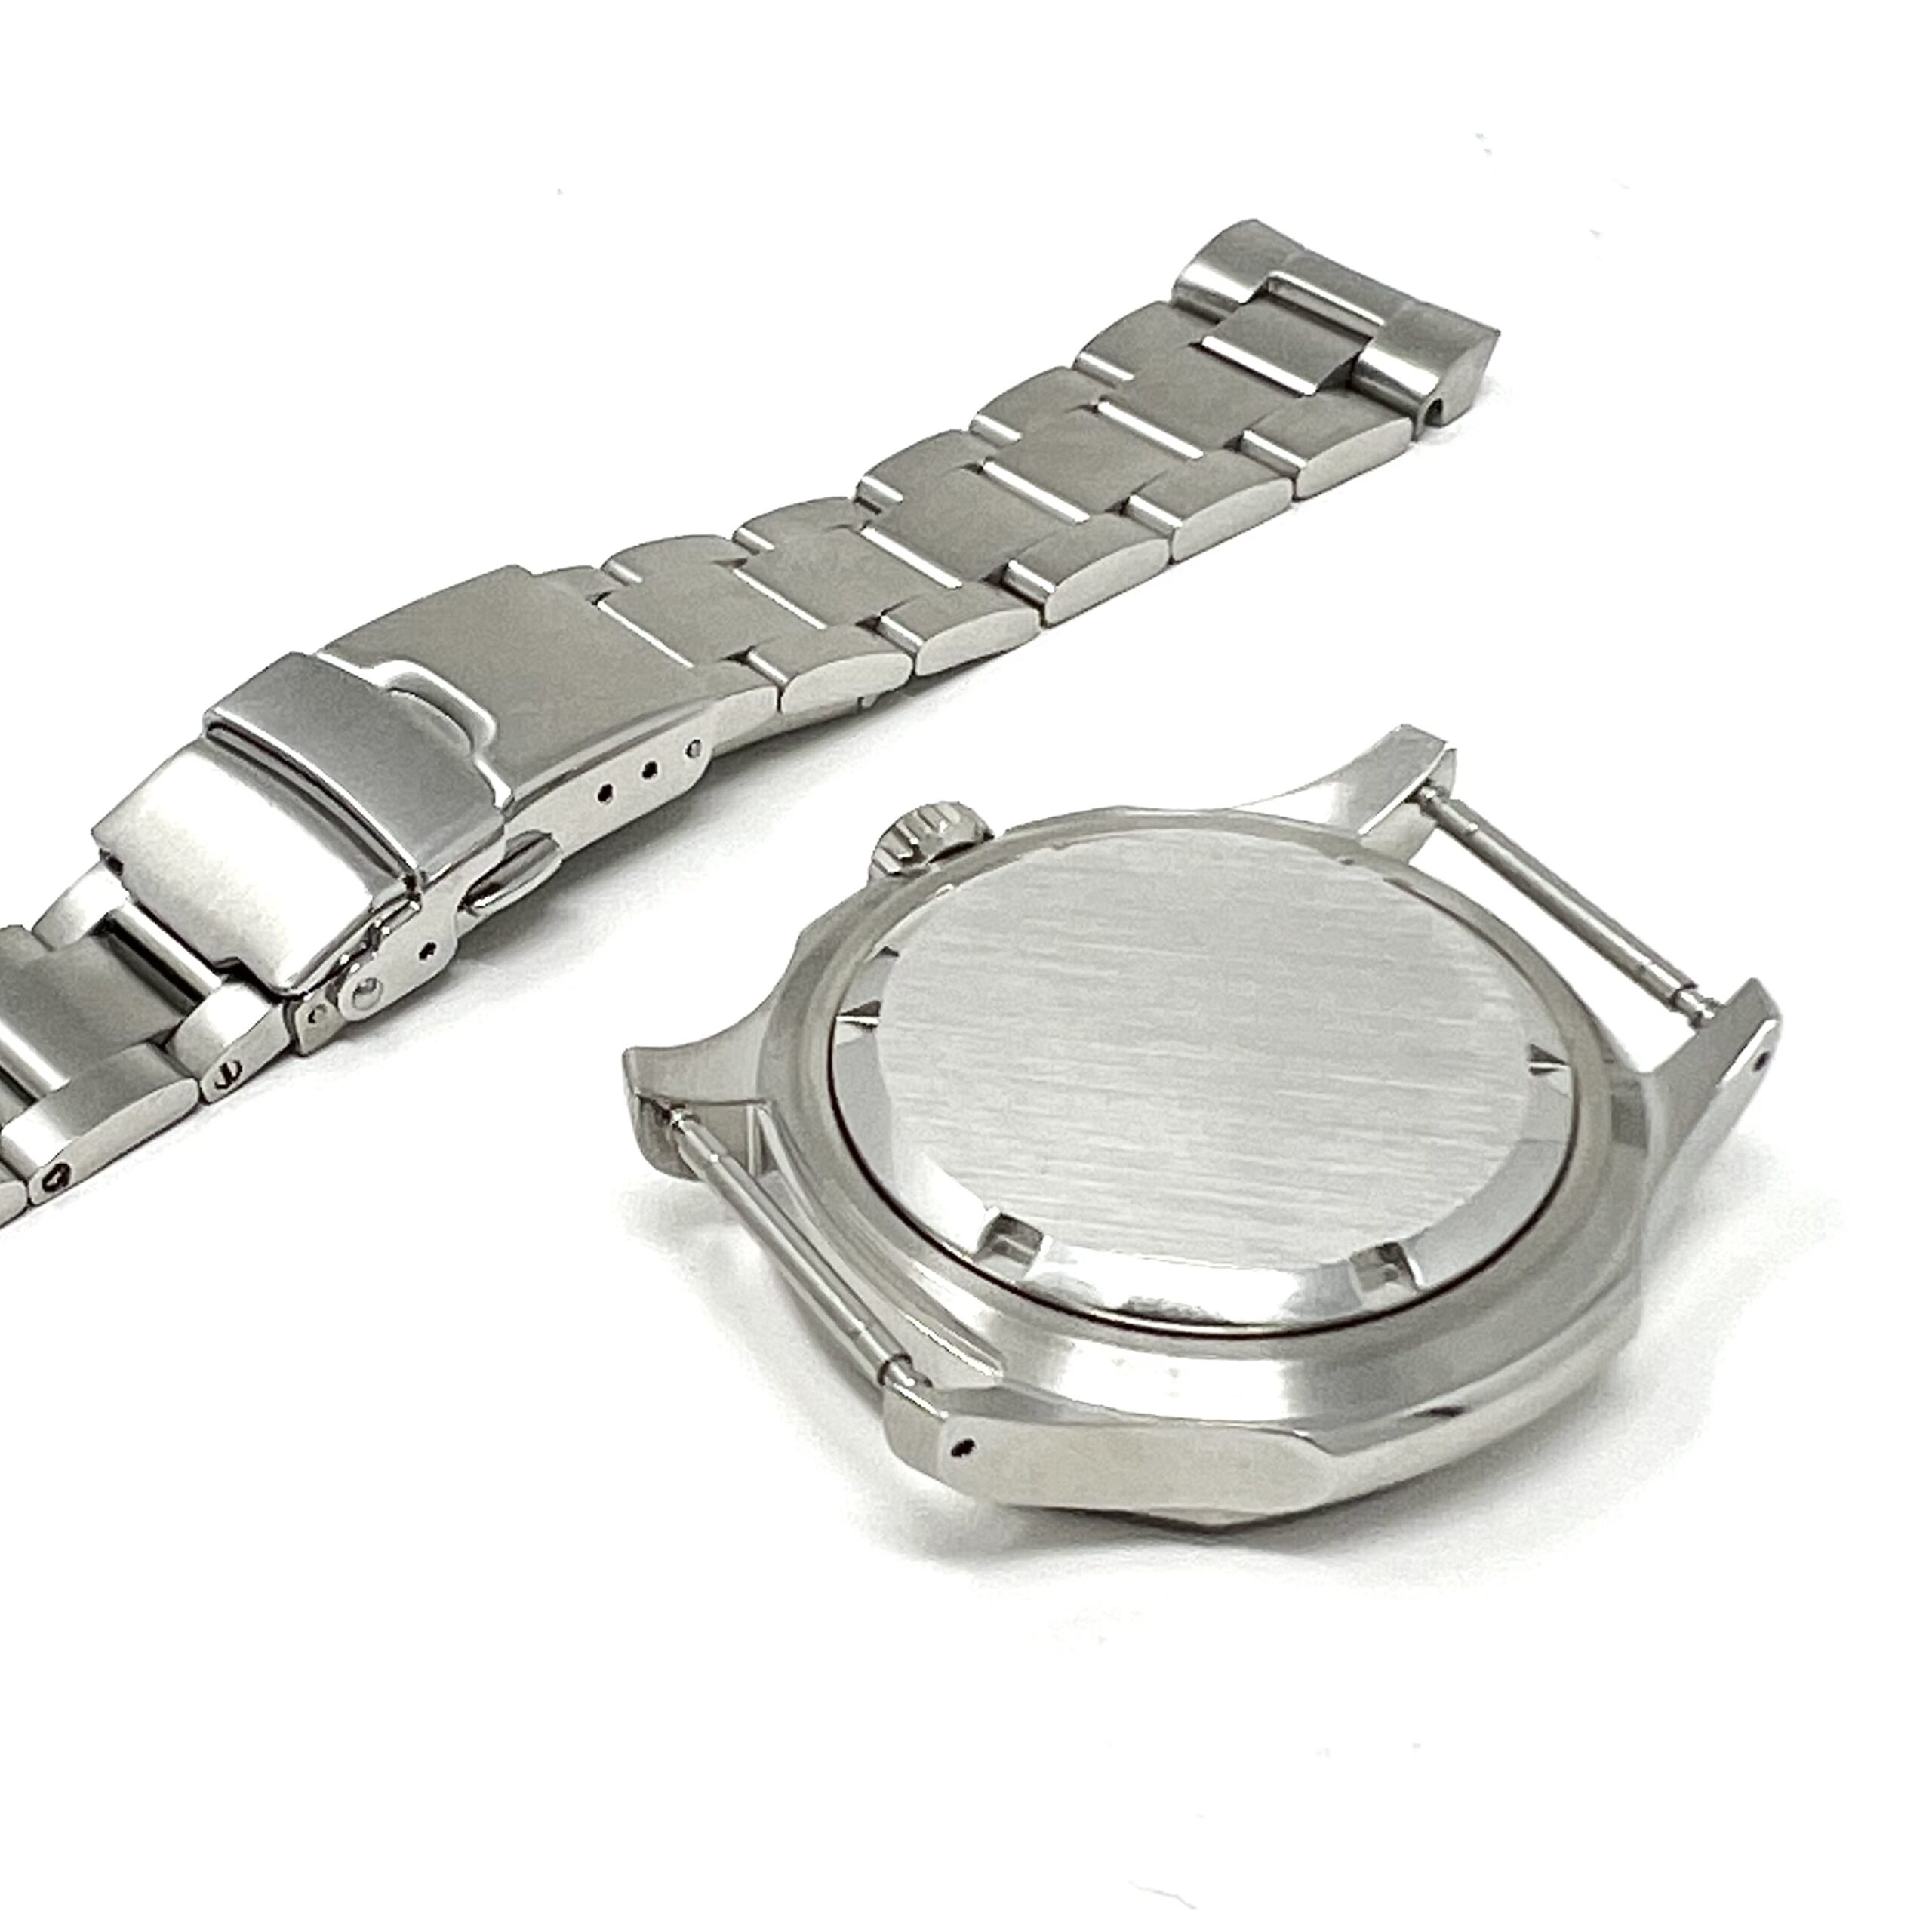 Nautilus AP Style SKX007/SRPD Watch Case Set - CT721 Polished/Brushed -  Blue AR - Seiko Mod - Crystaltimes USA Seiko Mod Parts